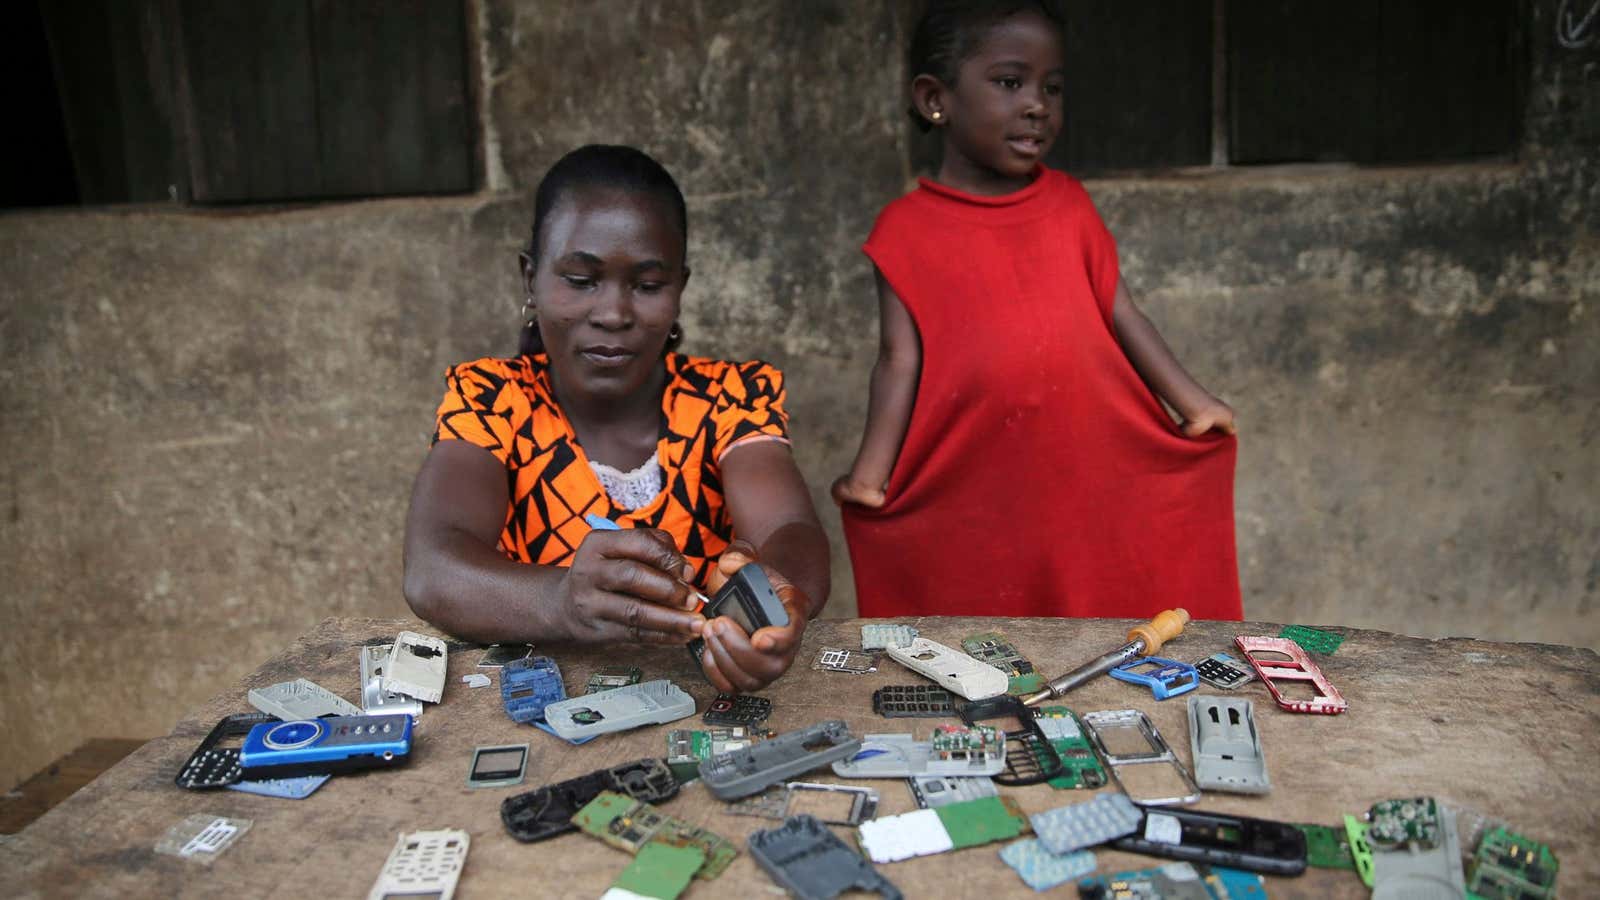 A woman repairs phones in southwest Nigeria